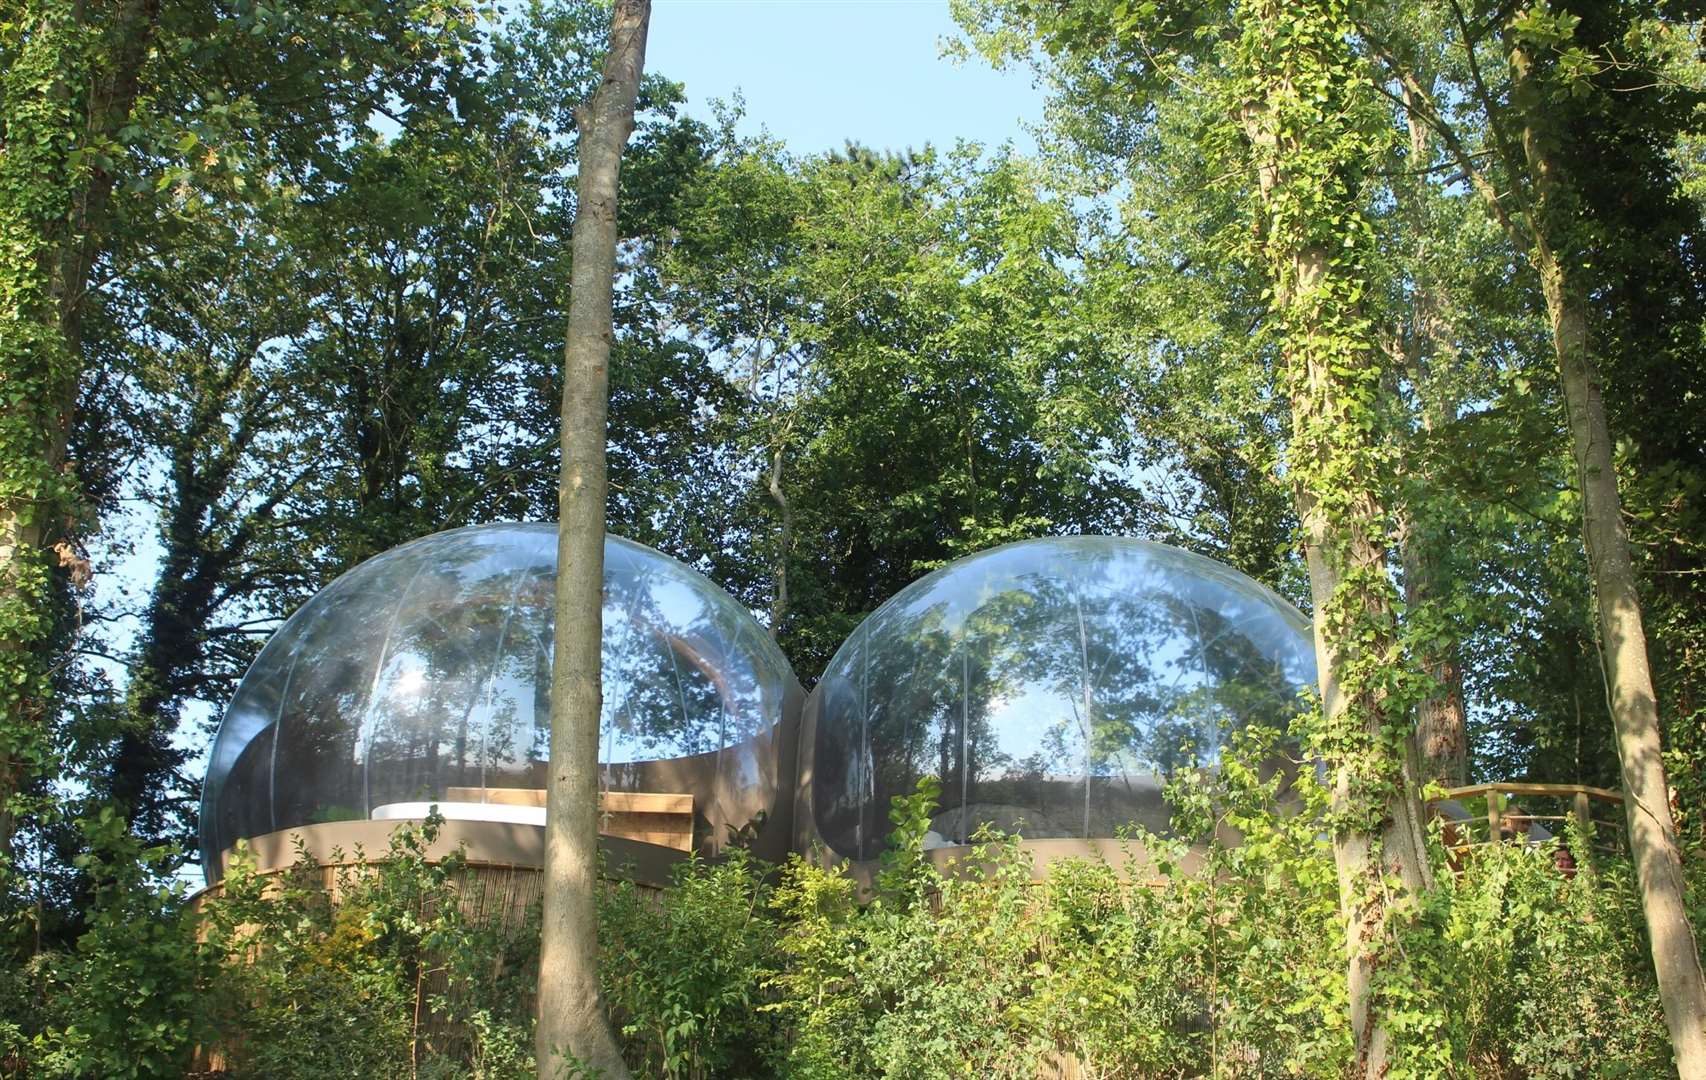 The Bubble retreat at Port Lympne